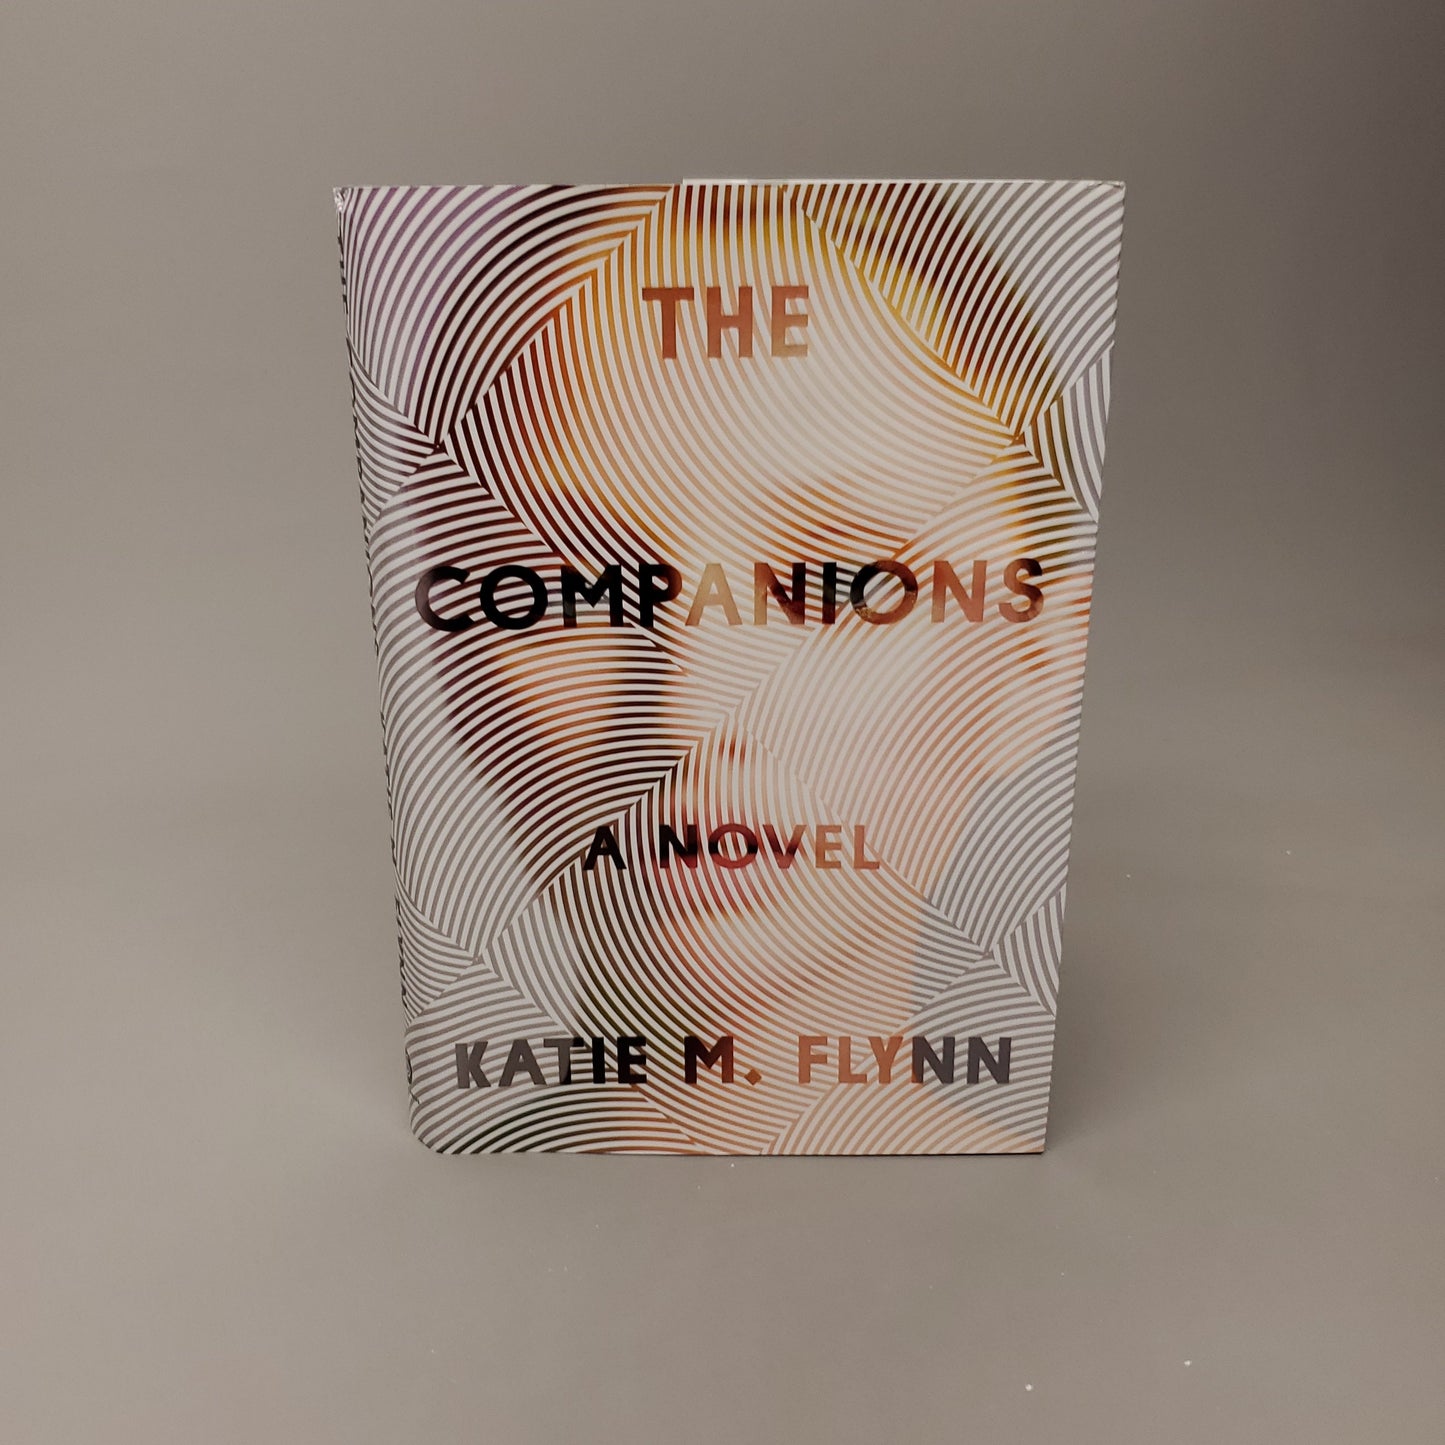 THE COMPANIONS A Novel by Katie M. Flynn Book Hardback (New)